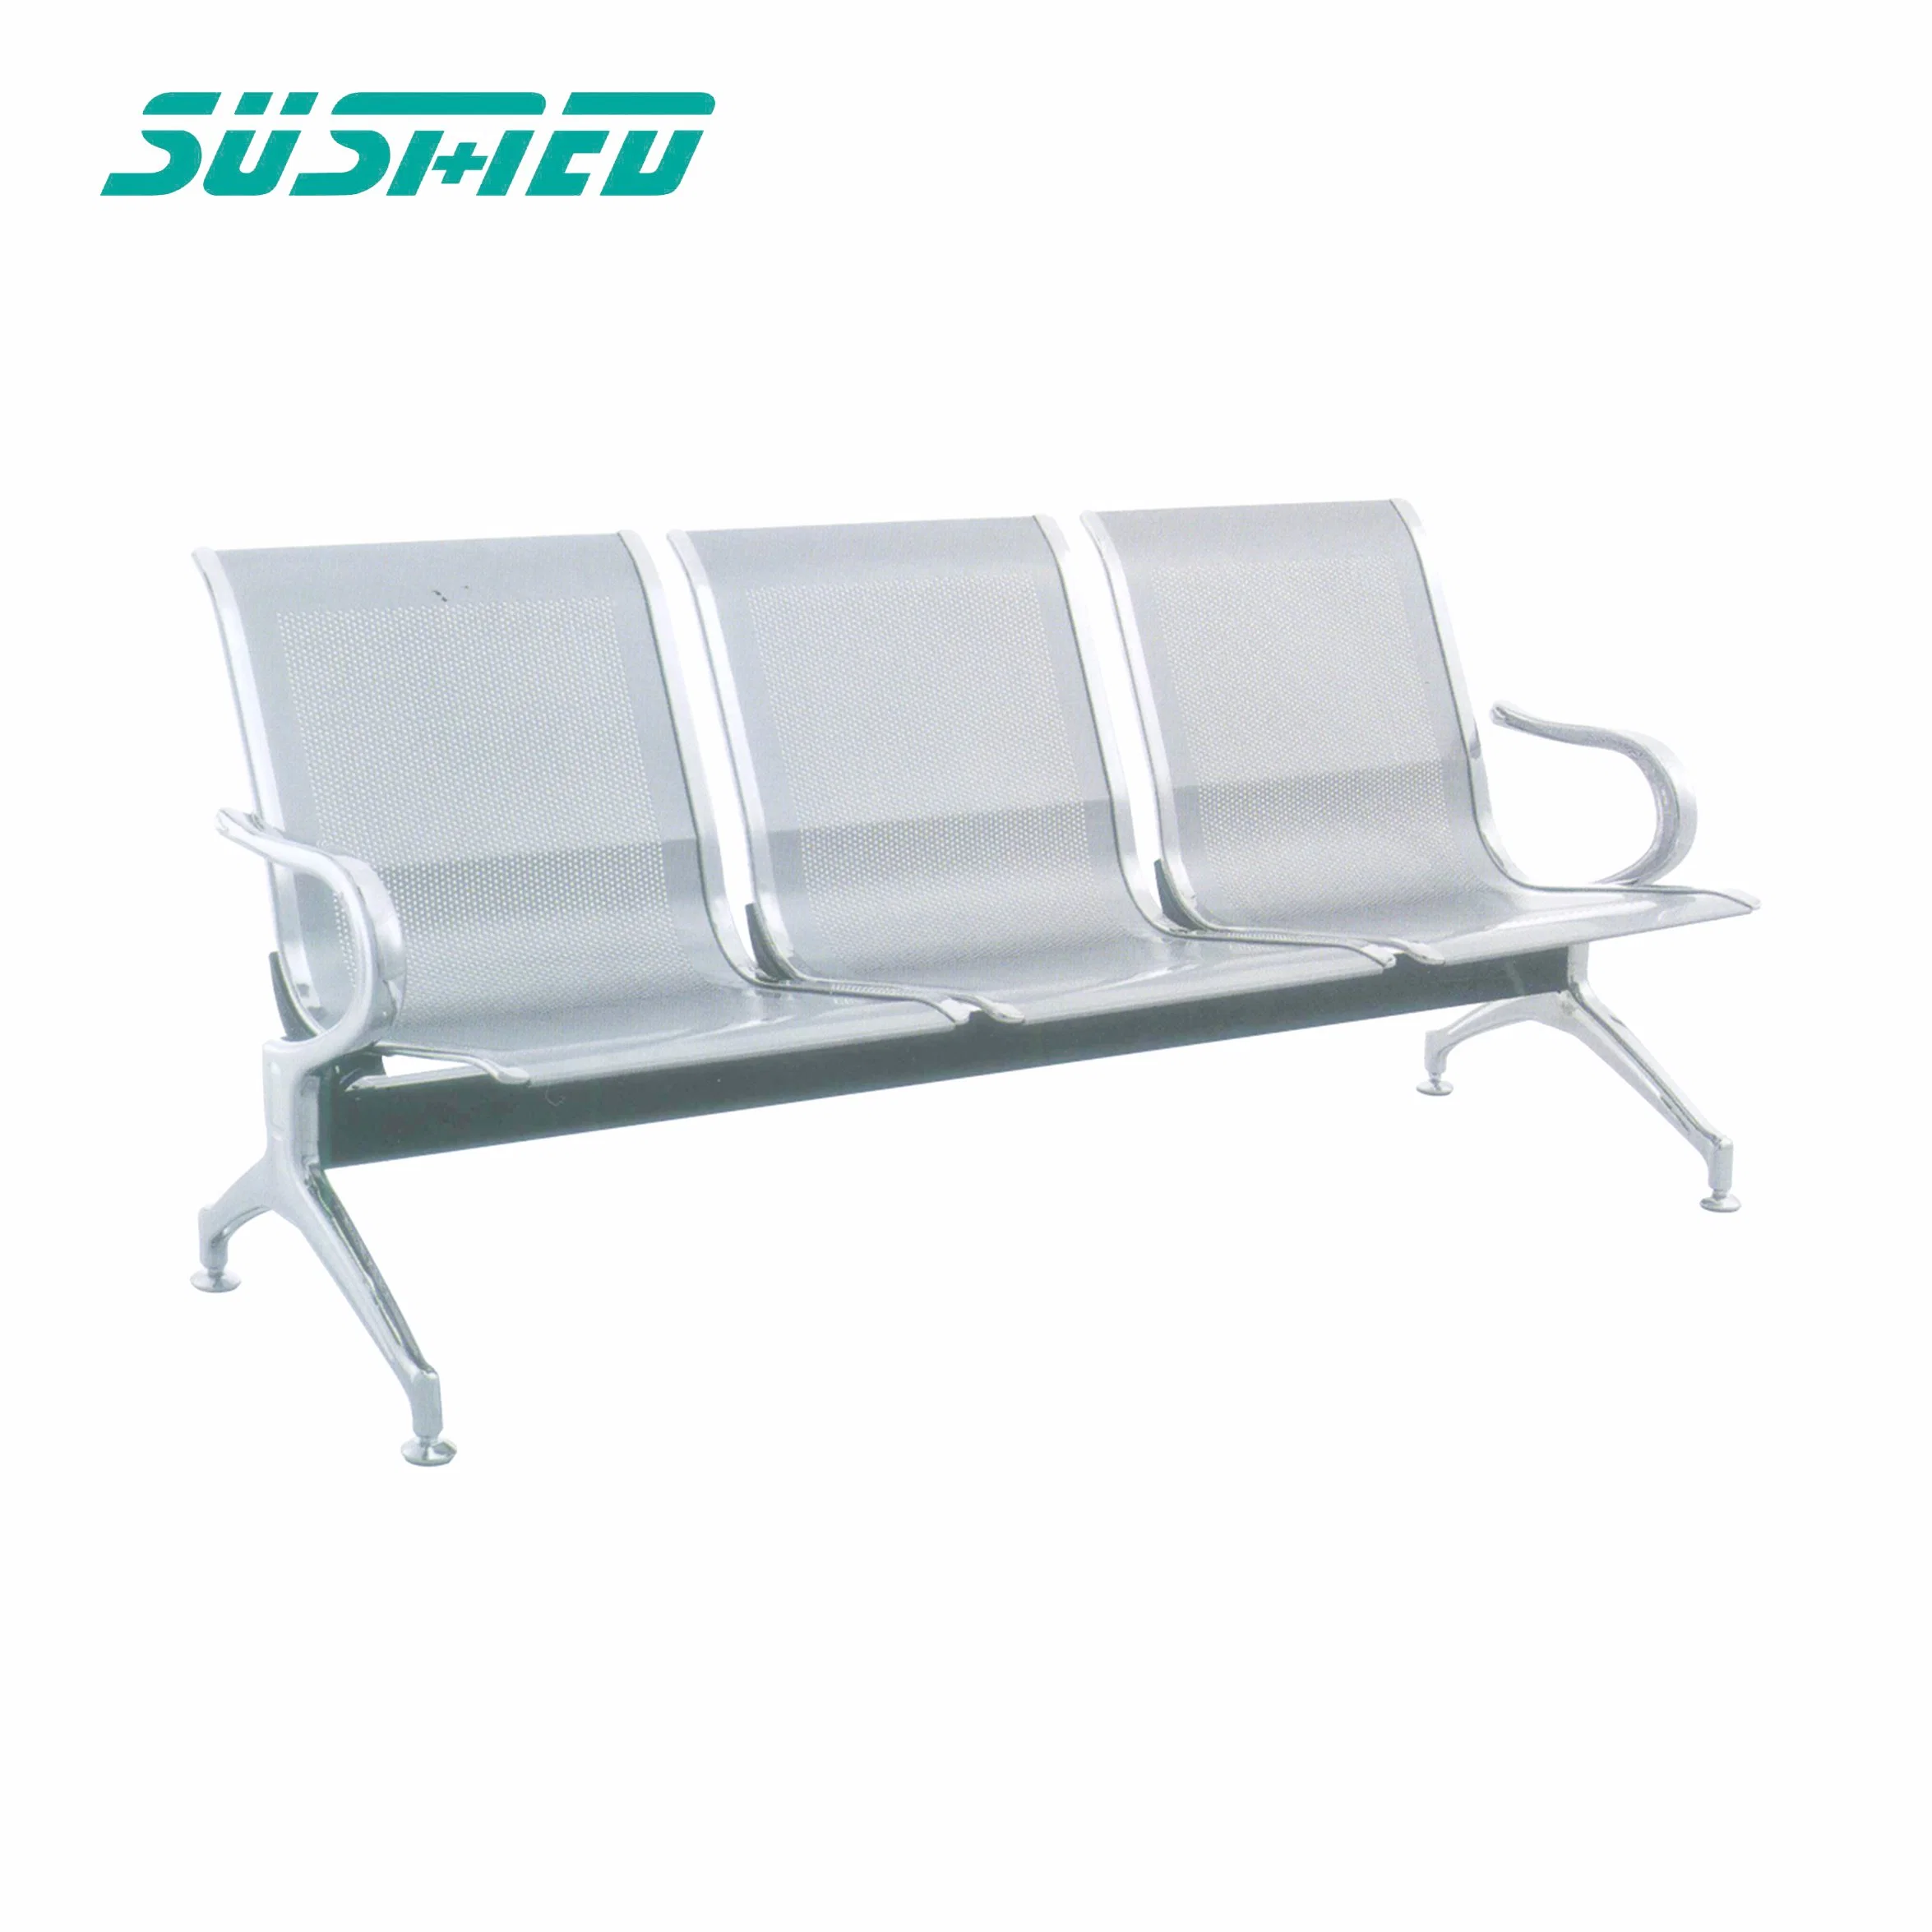 Cold Rolled Steel Aluminium Airport Waiting Chair Waiting Bench Public Waiting Chair Hospital Chair